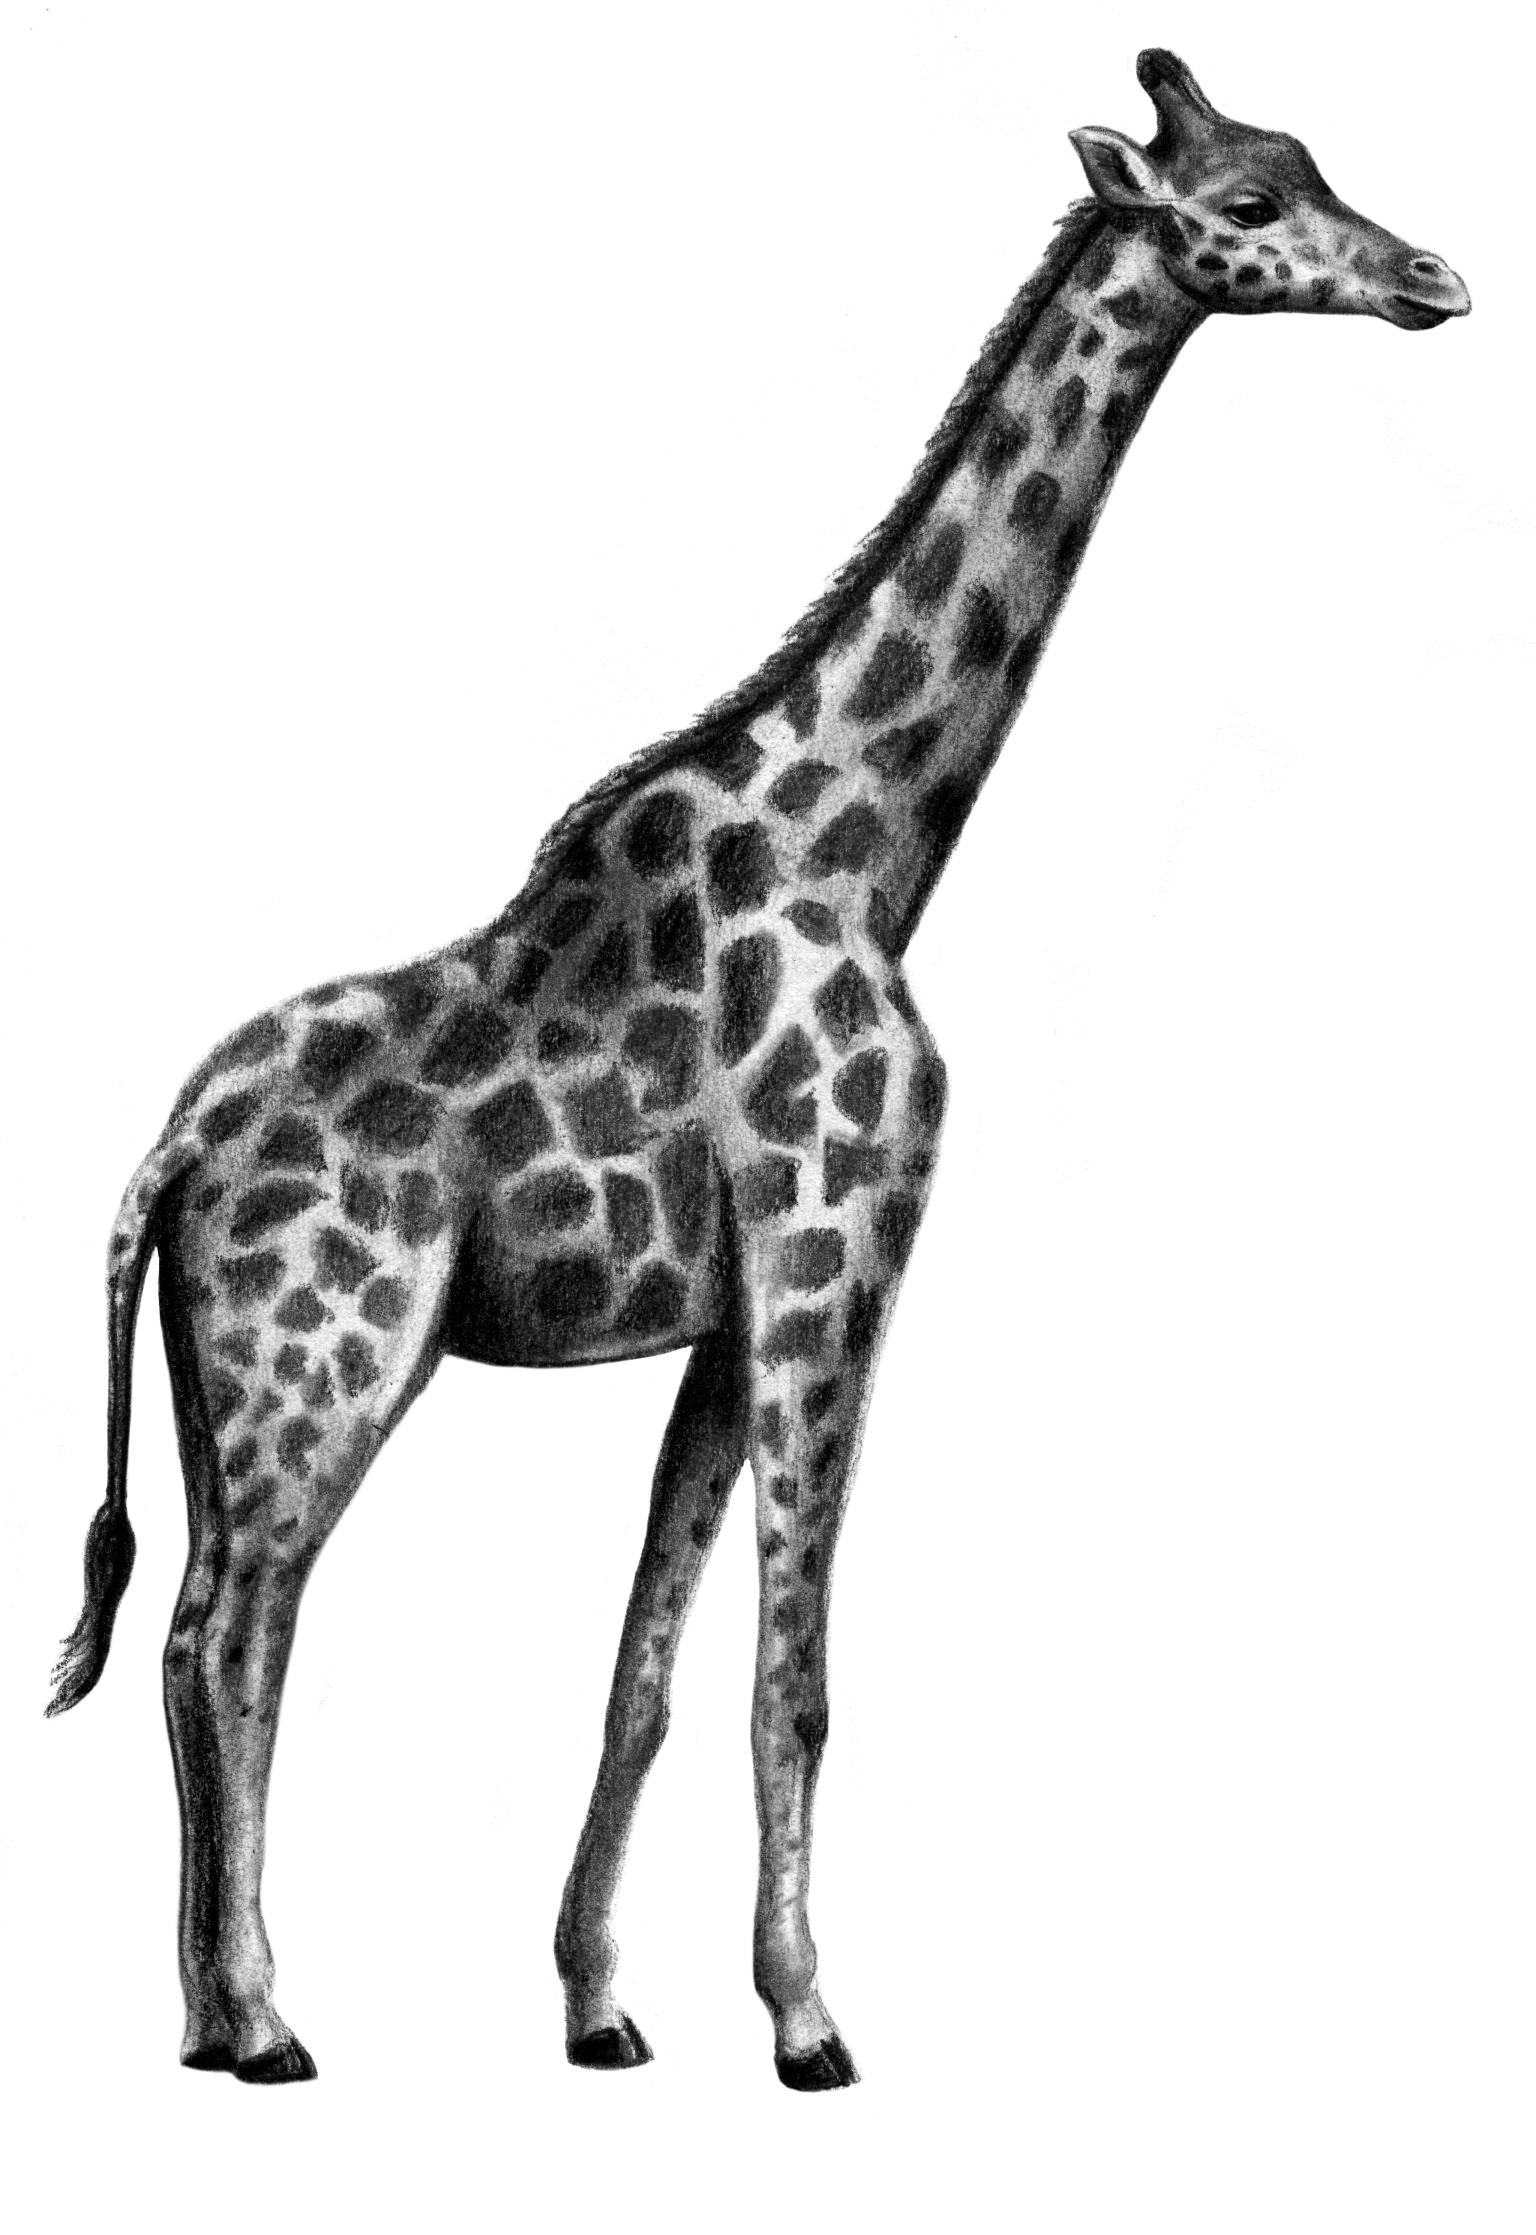 Giraffe Realistic Art, Pencil Drawing Images